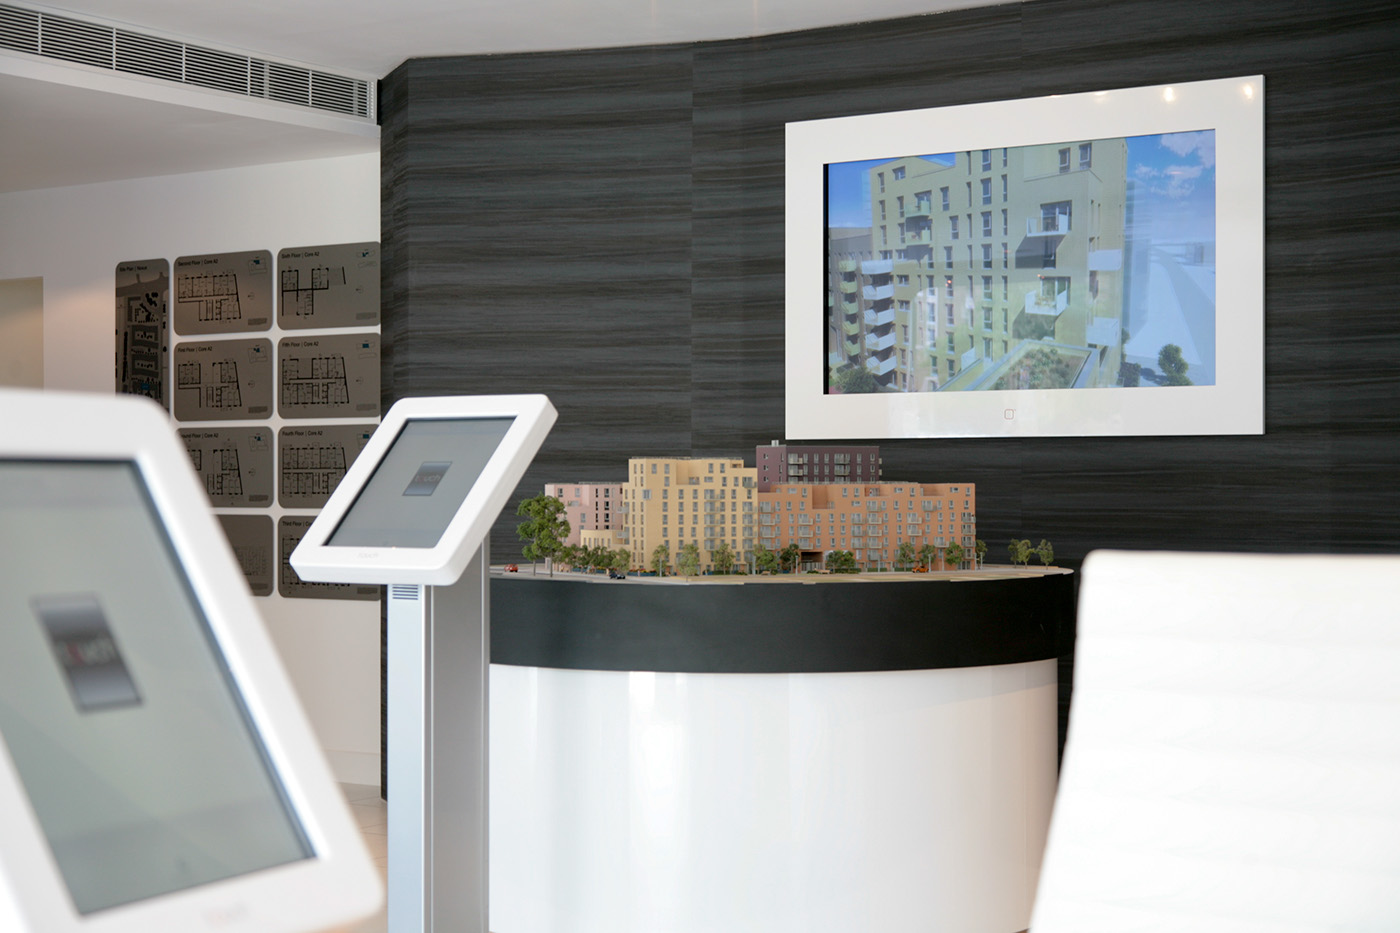 Adobe Portfolio bespoke furniture environmental graphics interactive displays signage strategy custom built displays Workplace Design corporate graphics